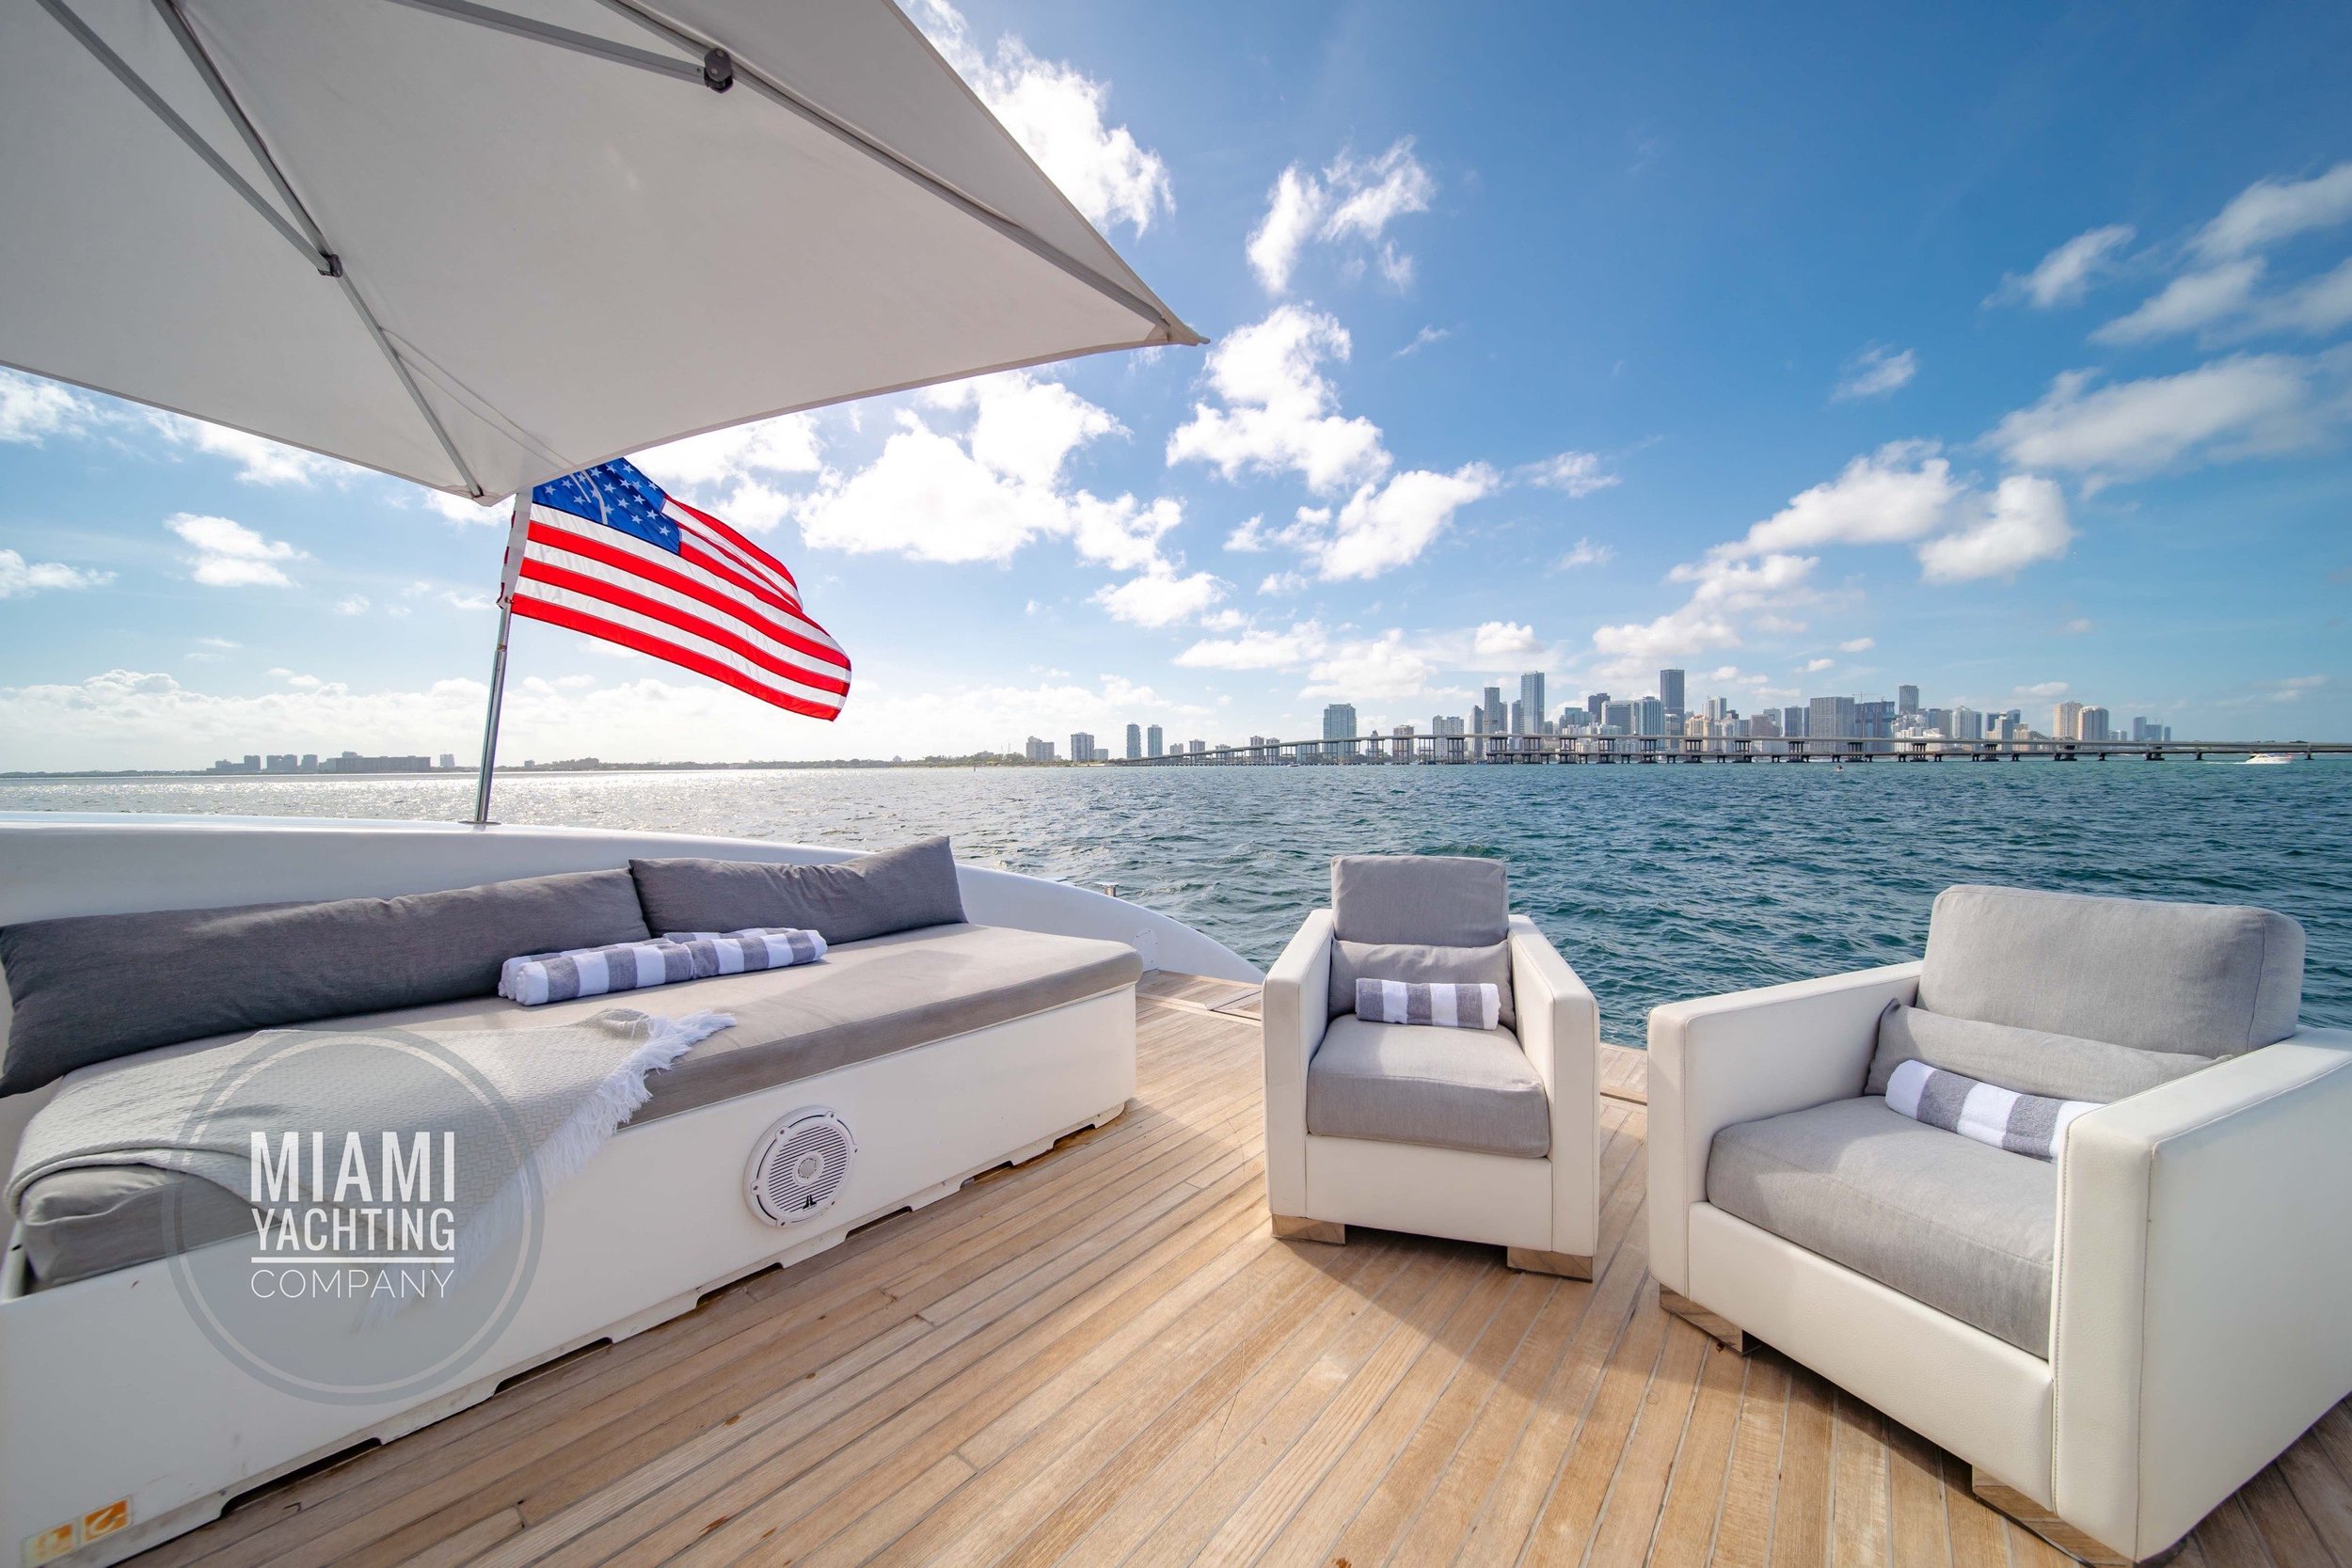 Miami_Yachting_Company_120_Tecnomar62.jpg